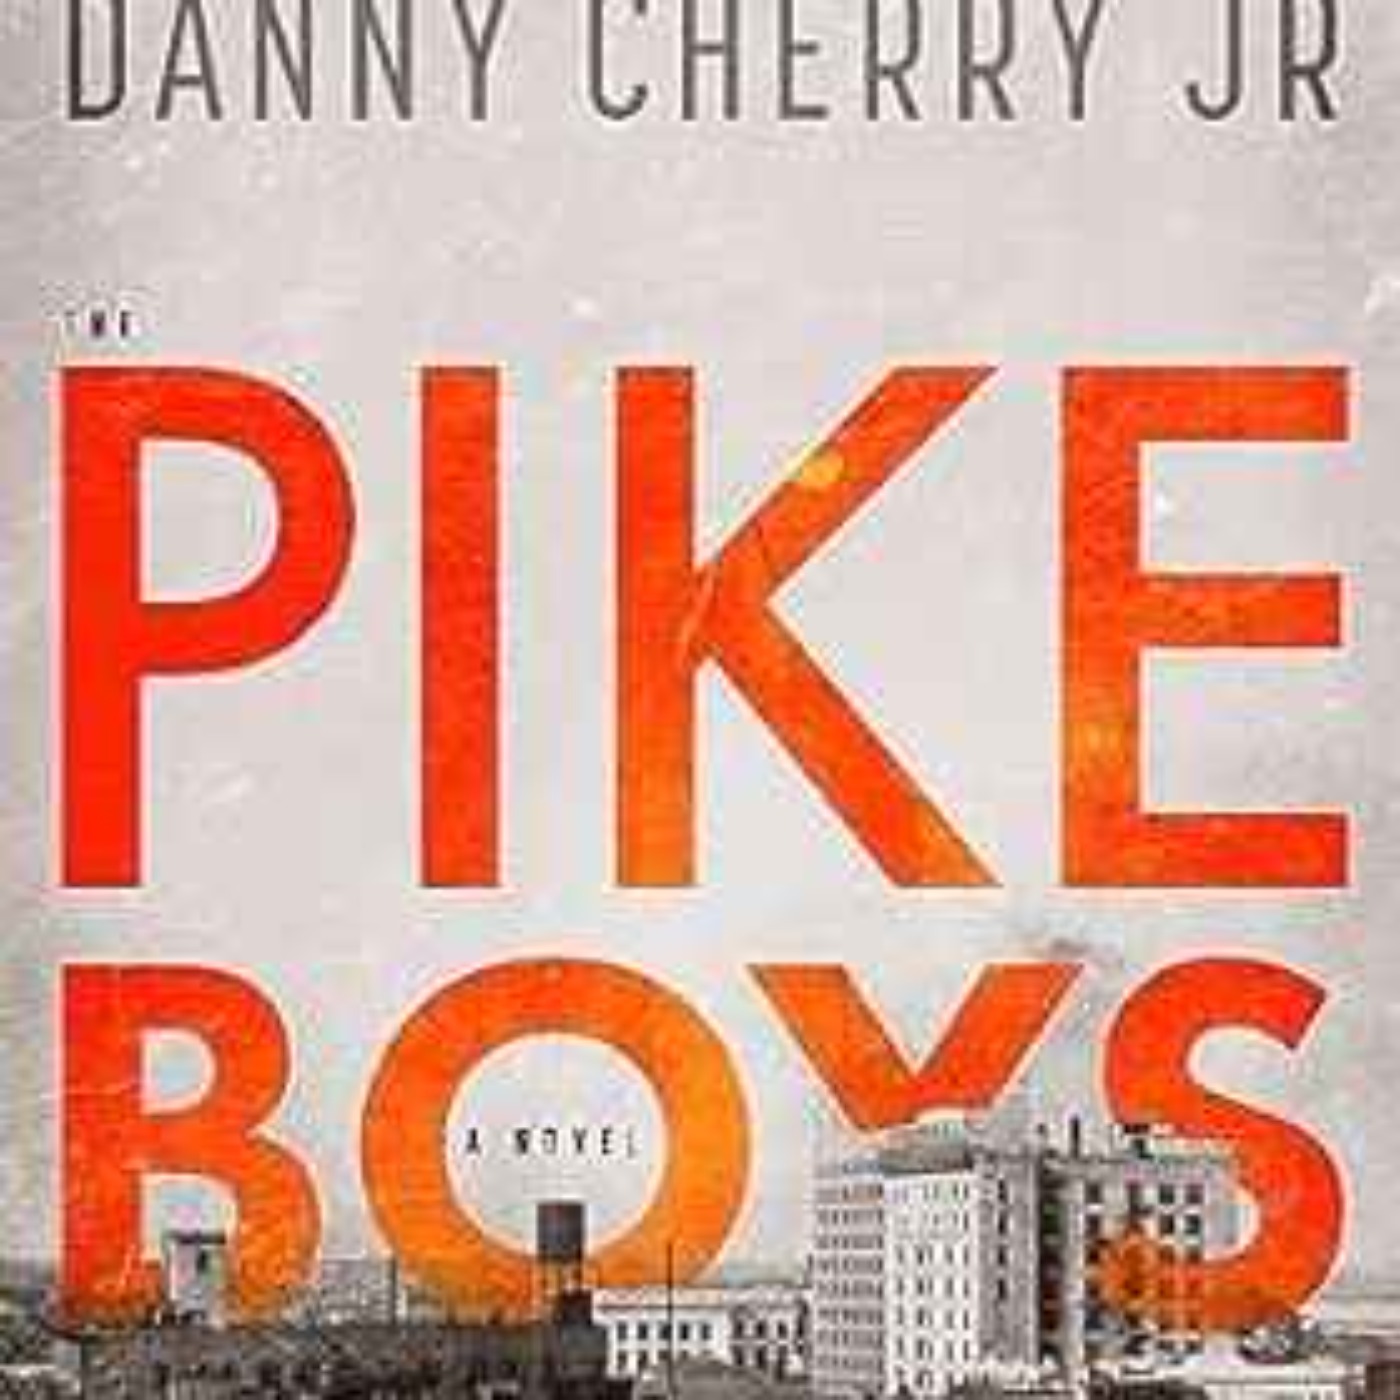 Danny Cherry Jr. - Pike Boys